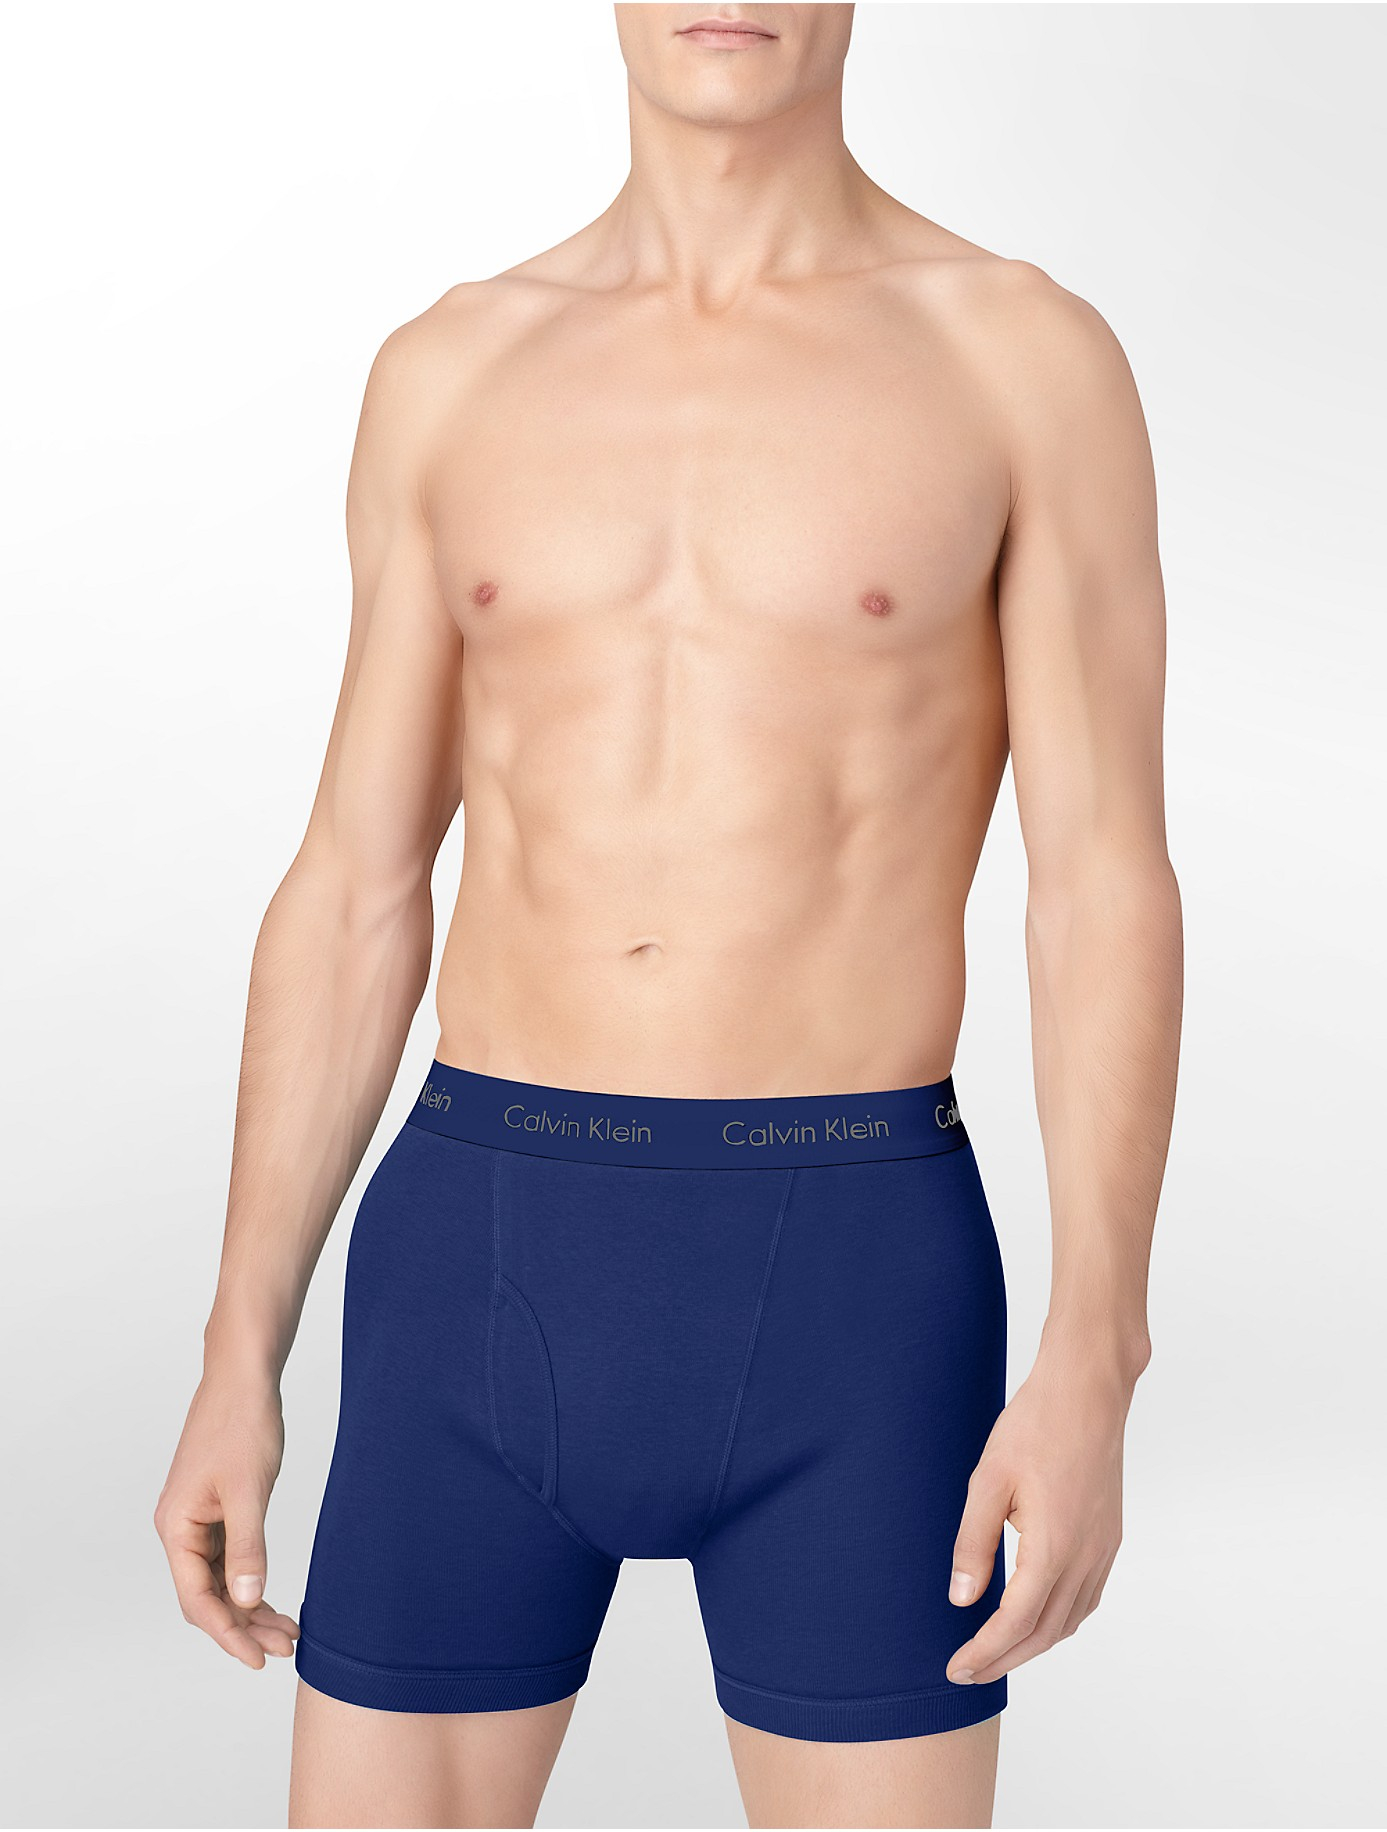 Lyst - Calvin klein Underwear Classics Big + Tall Boxer Brief in Purple ...